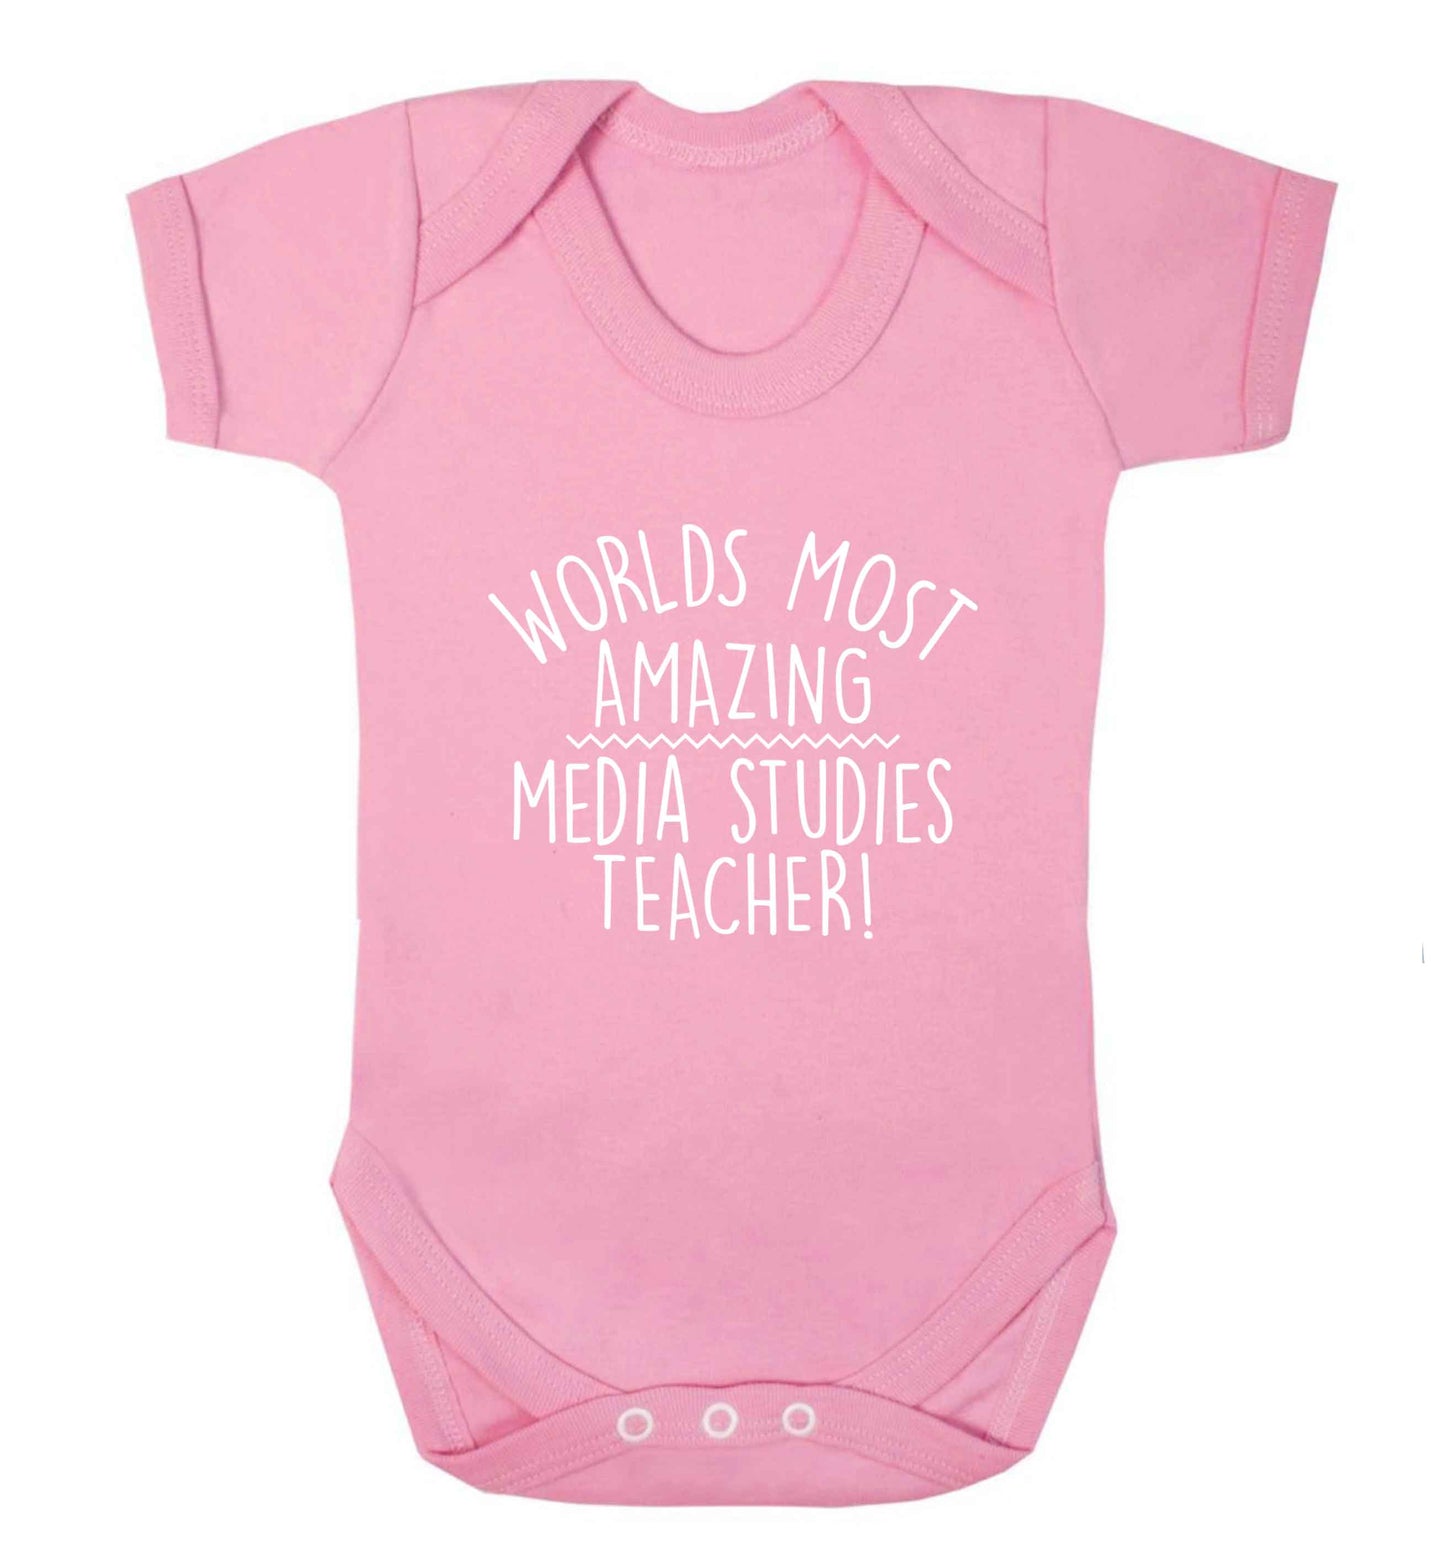 Worlds most amazing media studies teacher baby vest pale pink 18-24 months